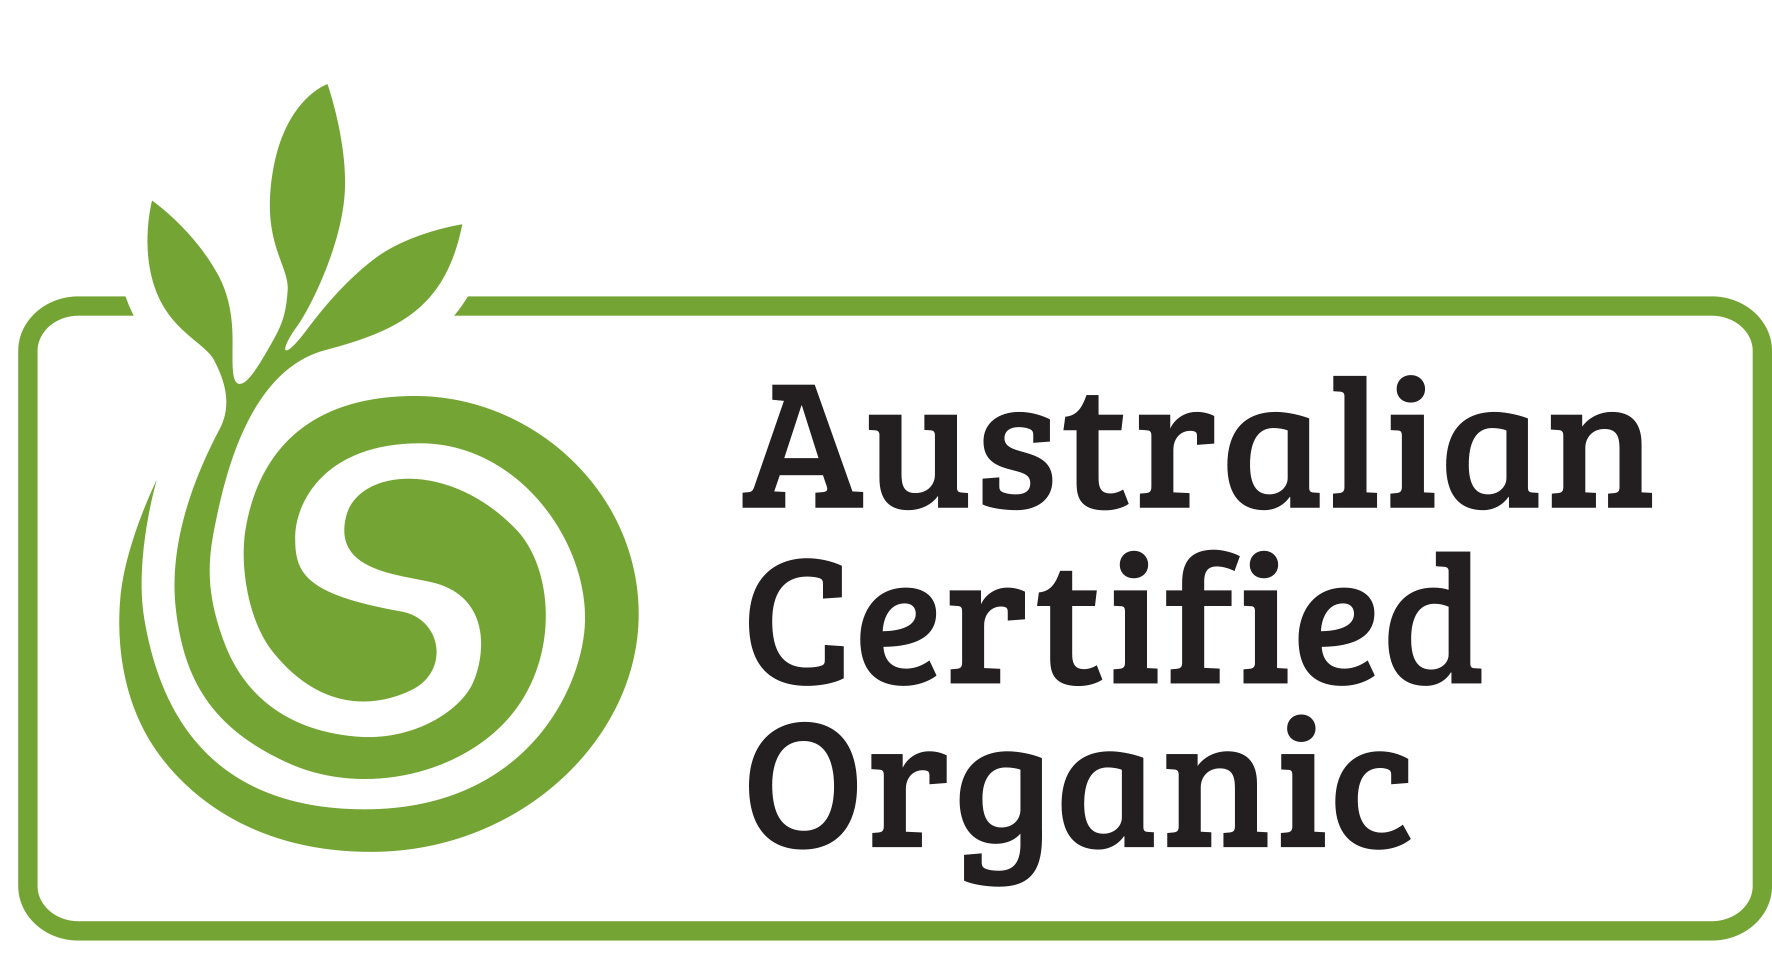 Organic Logo - About Australian Certified Organic